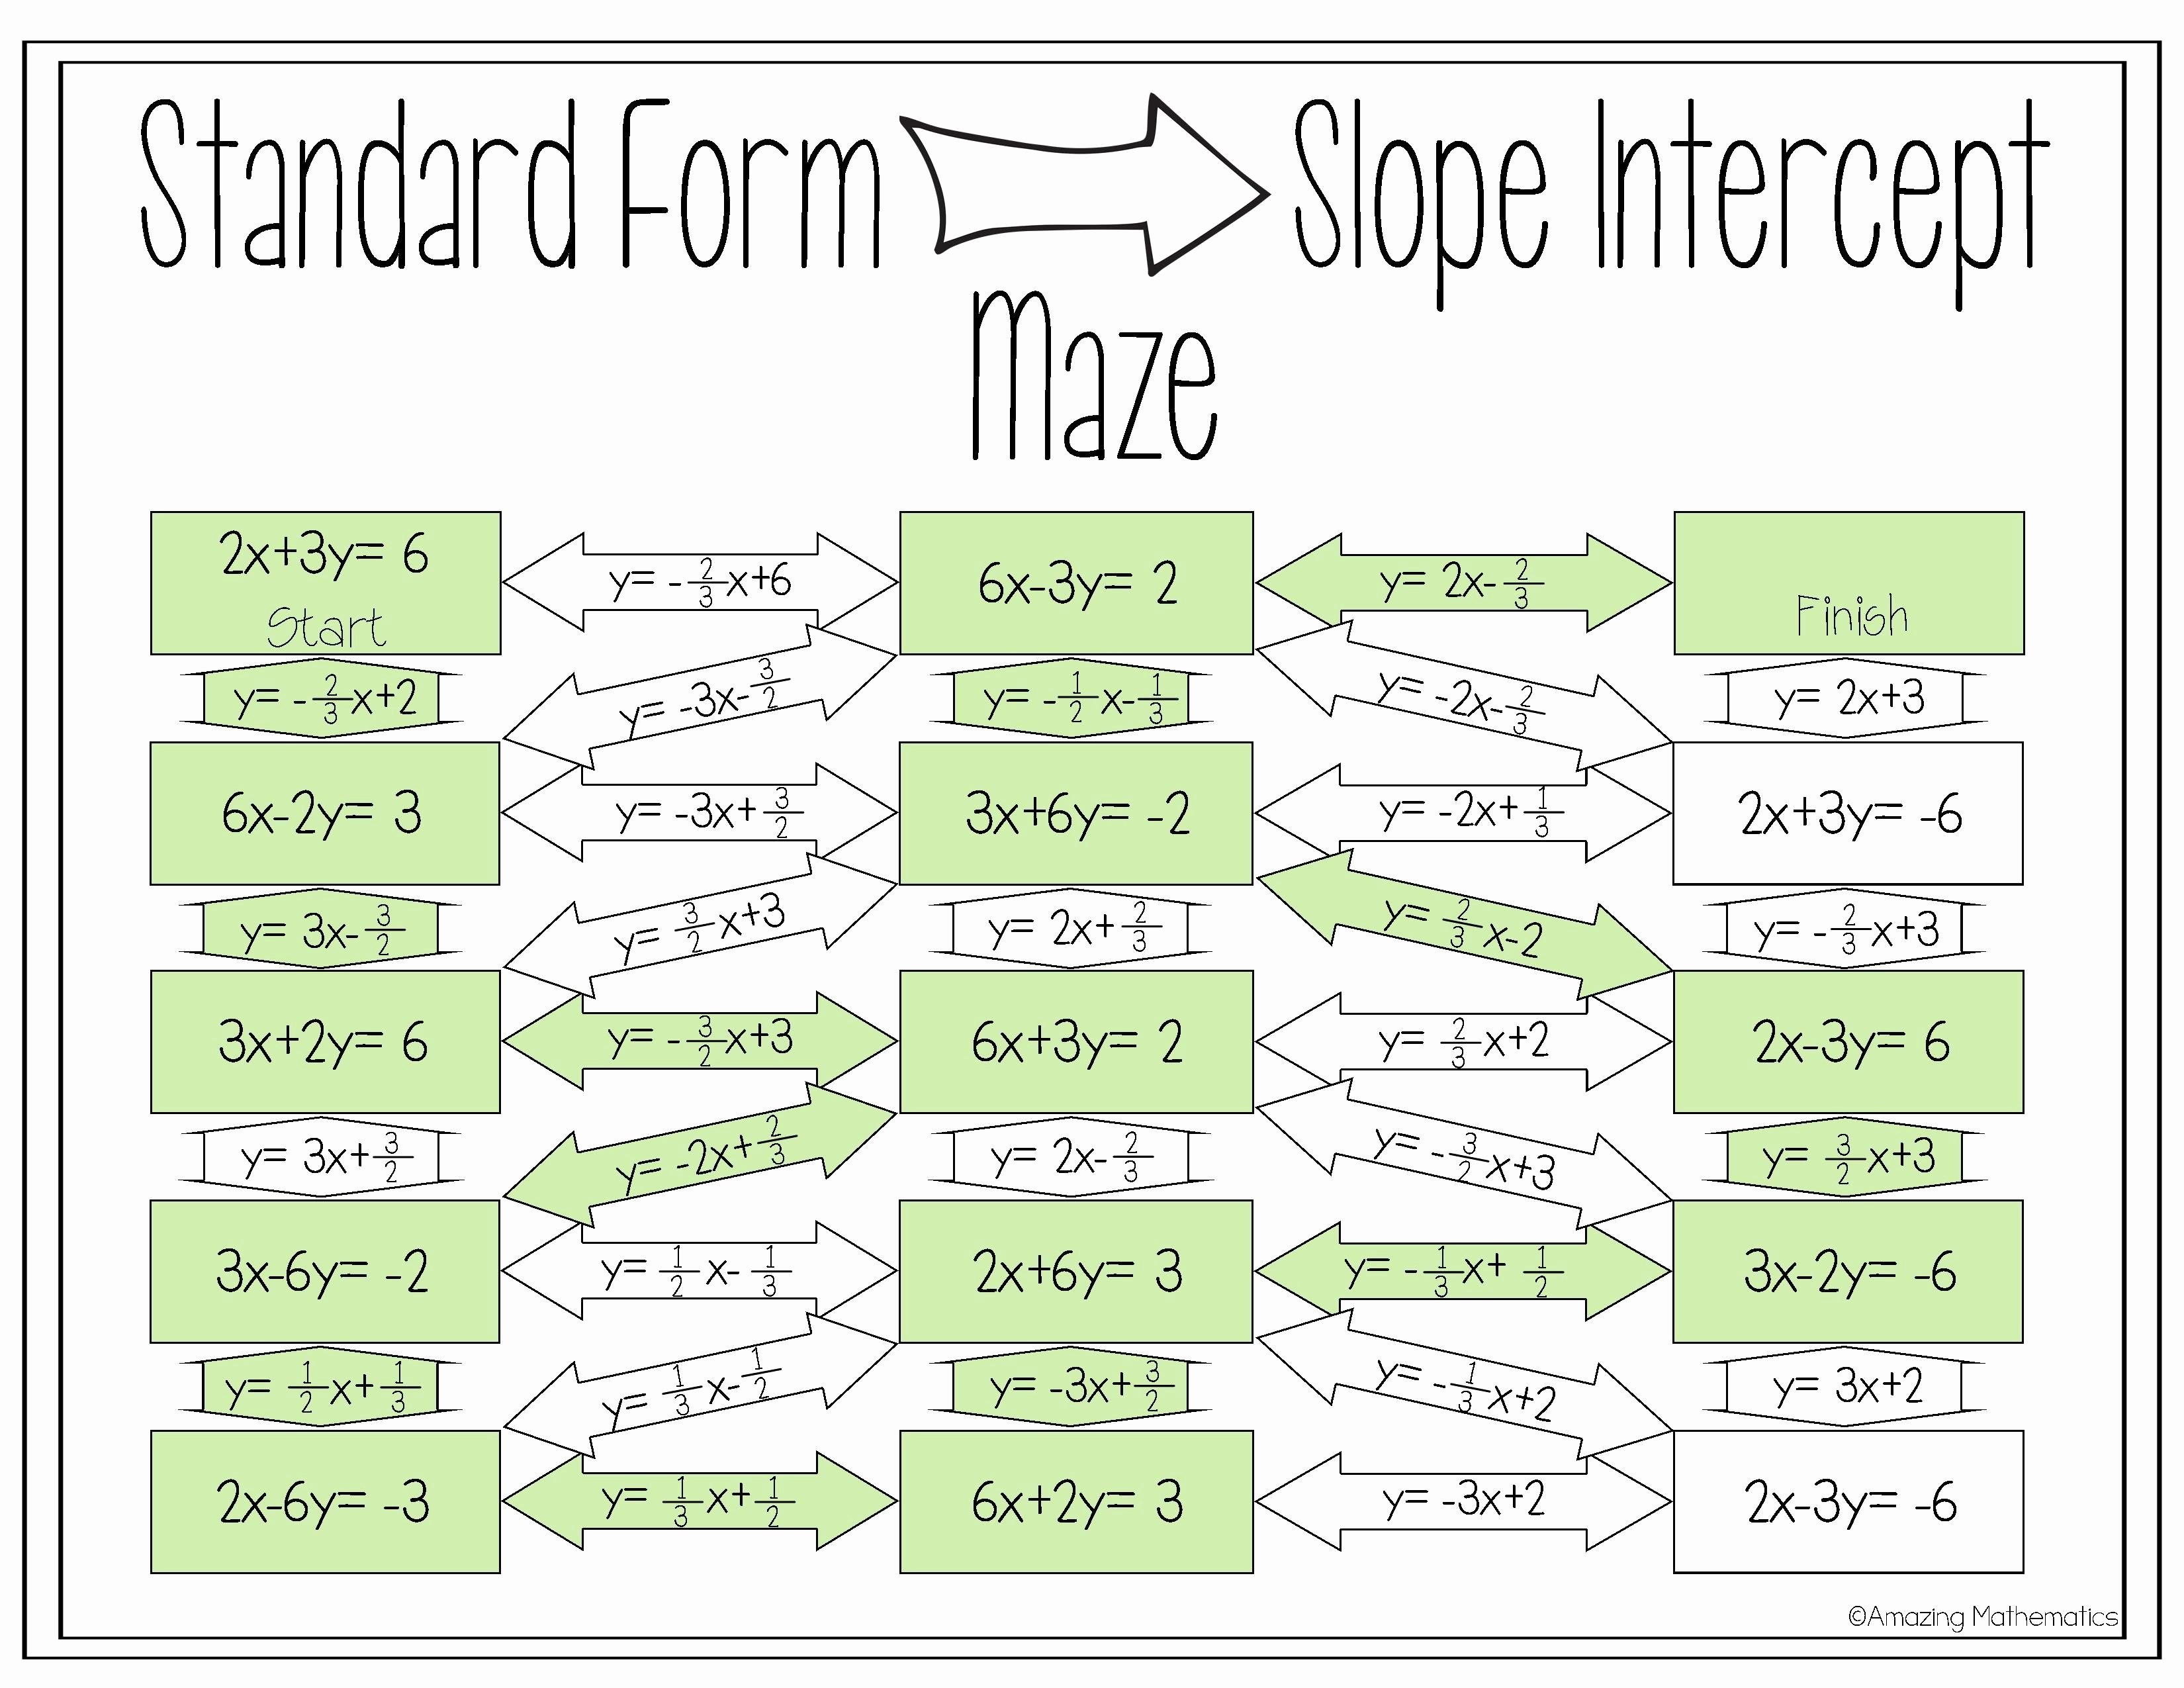 Point Slope form Practice Worksheet Lovely Converting Standard form to Slope Intercept form Maze